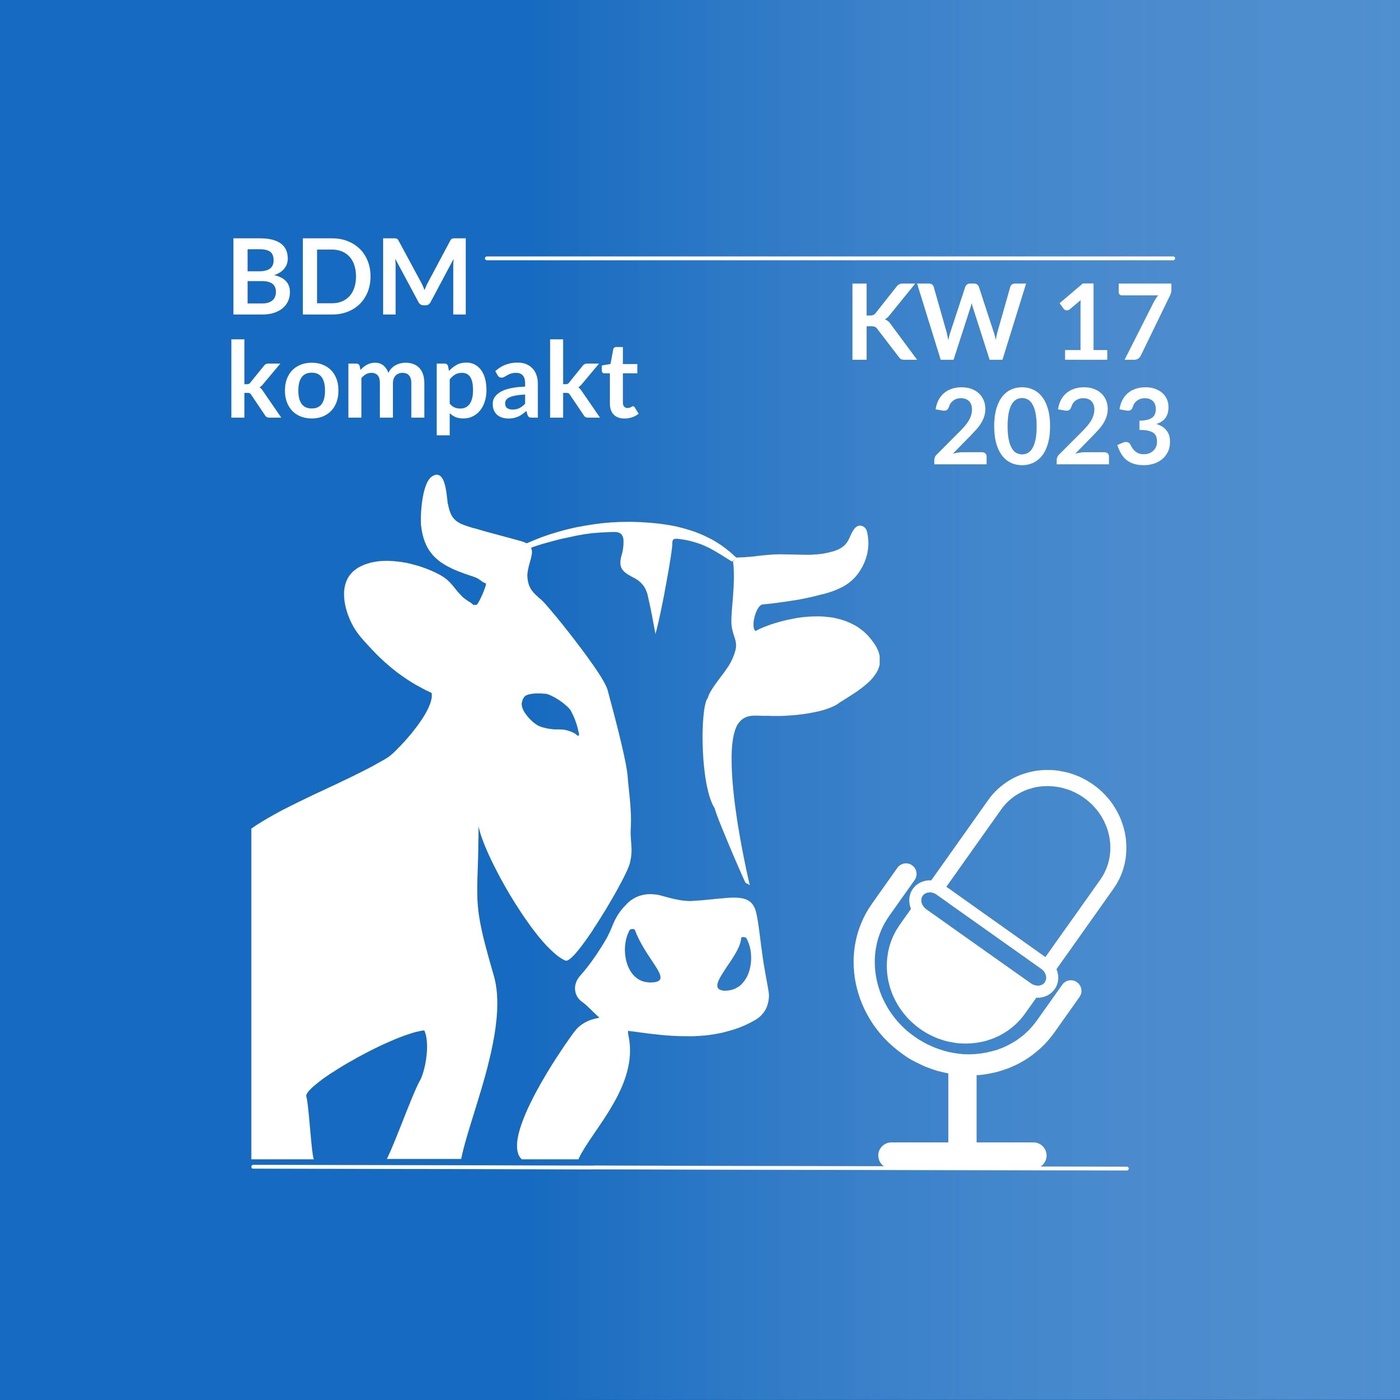 BDM kompakt KW 17/2023